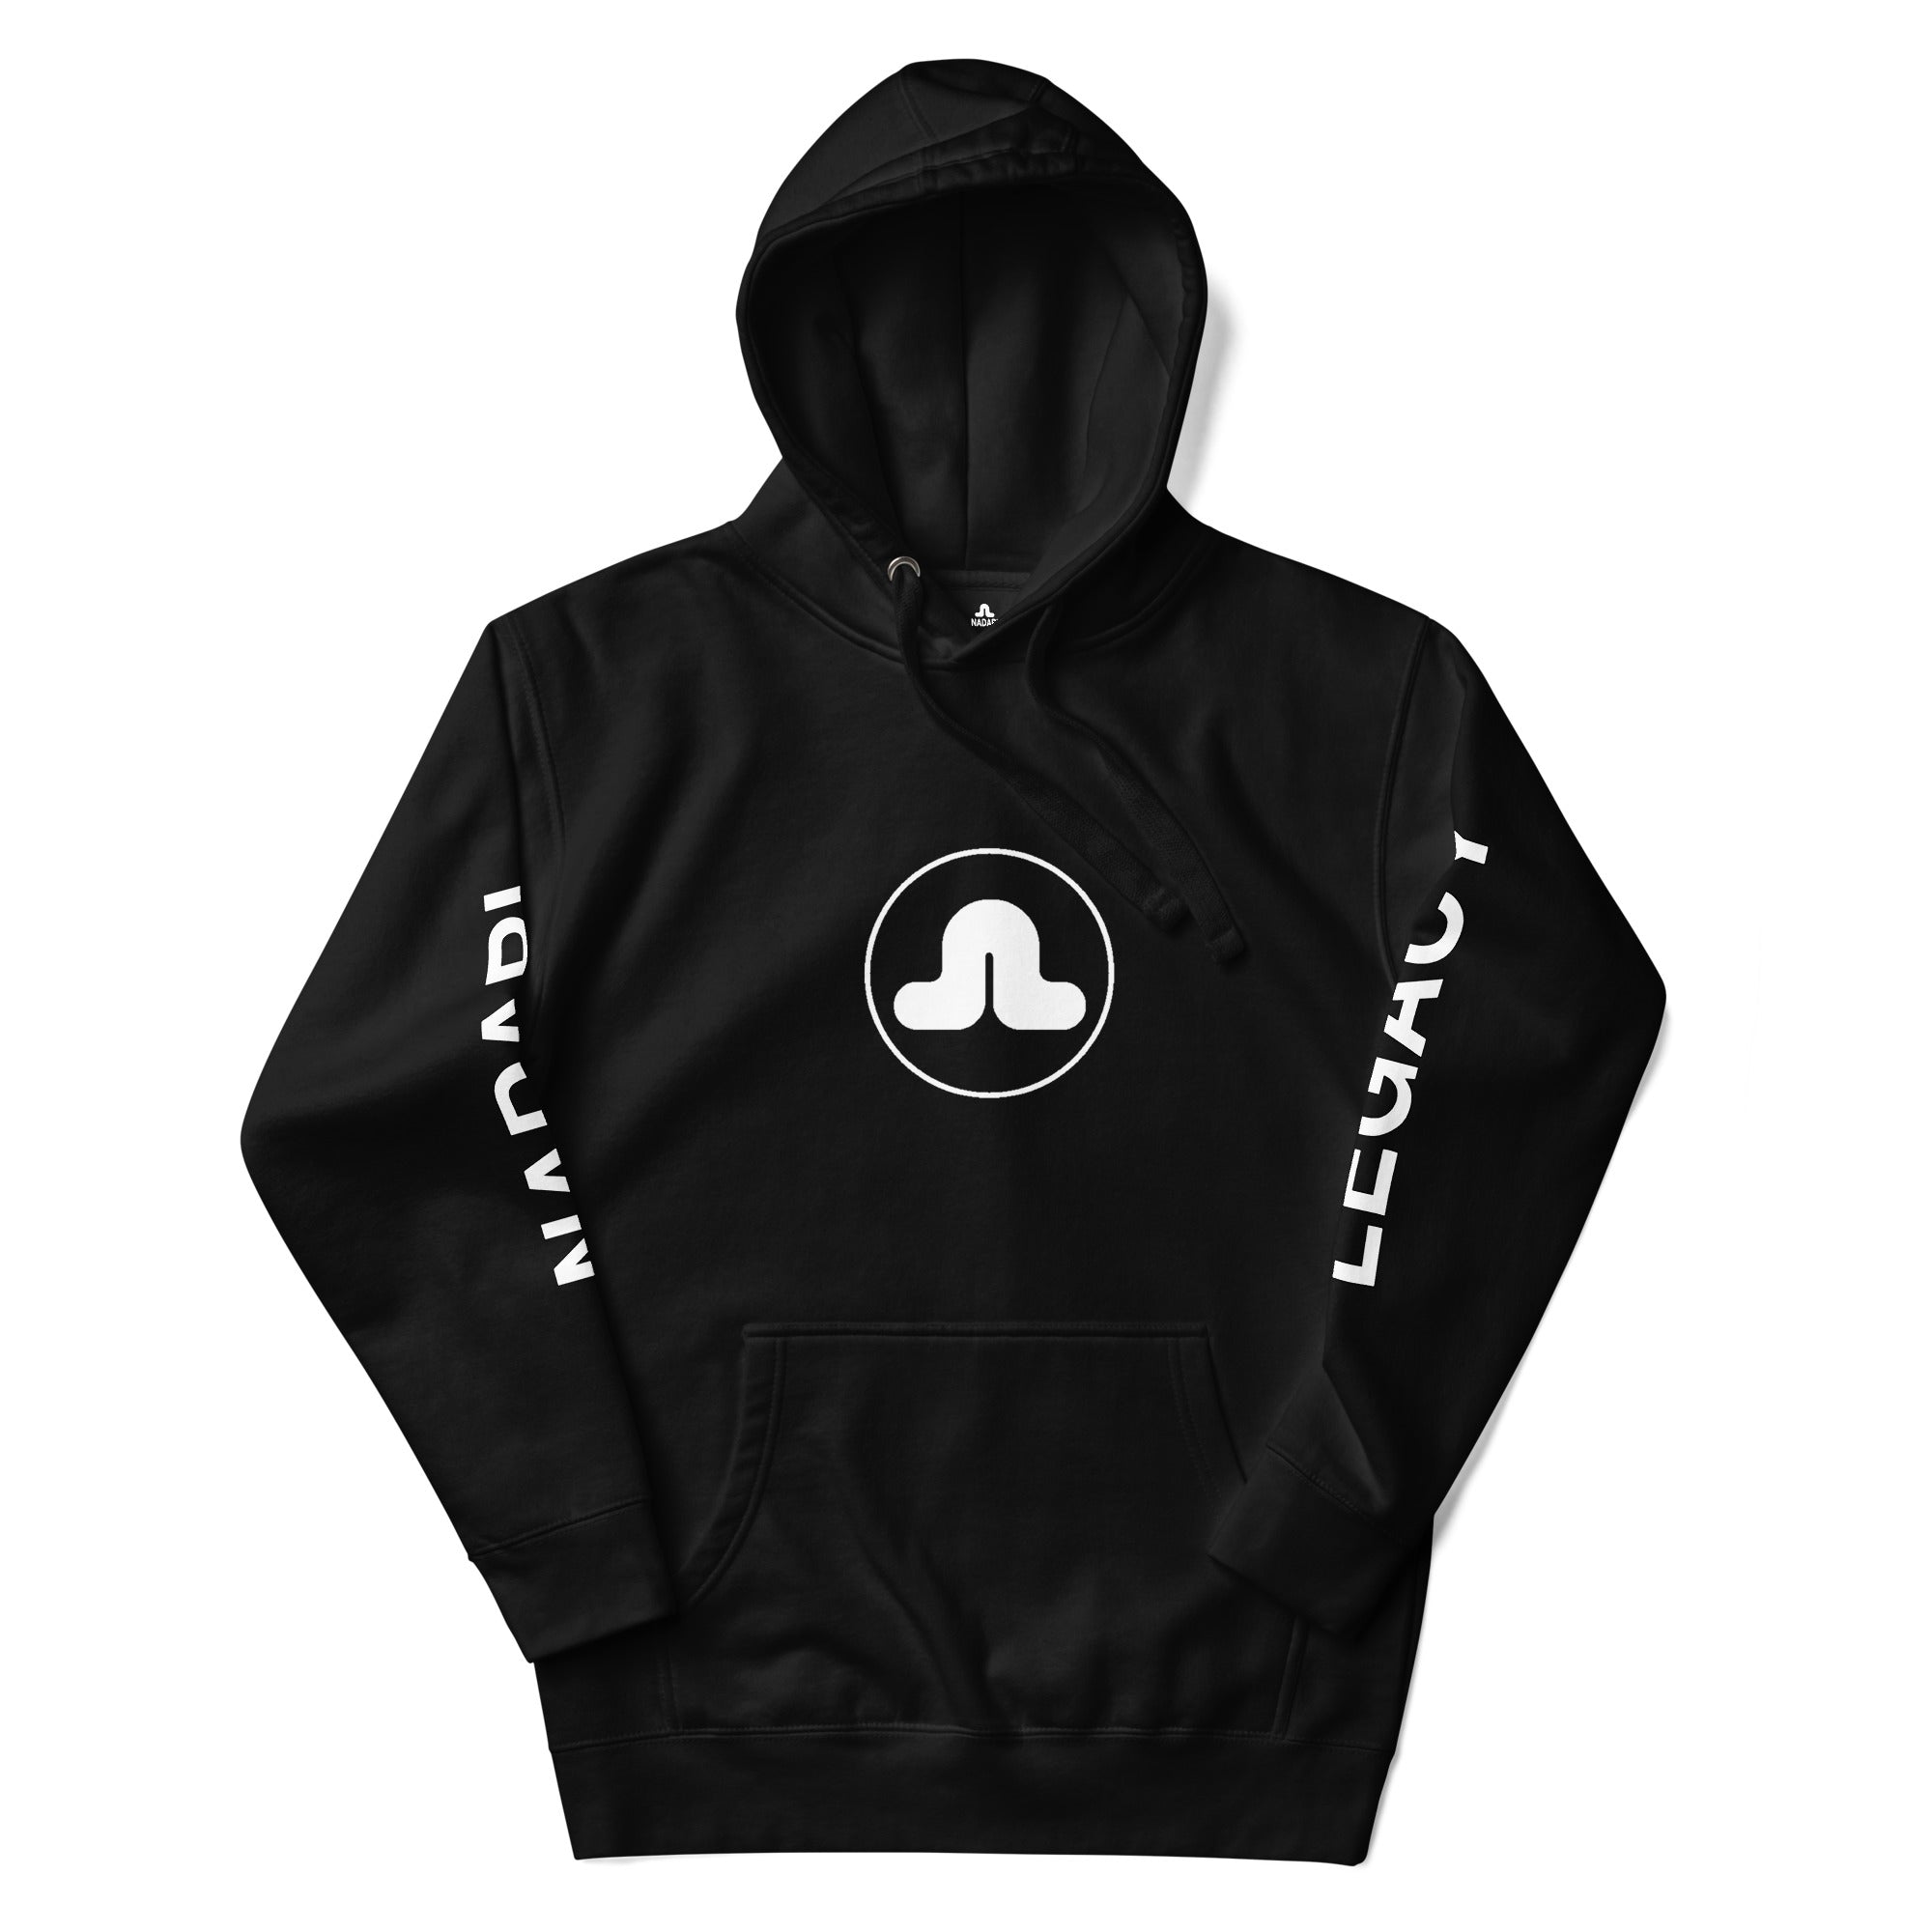 Legacy Prezi hoodie black  and white.